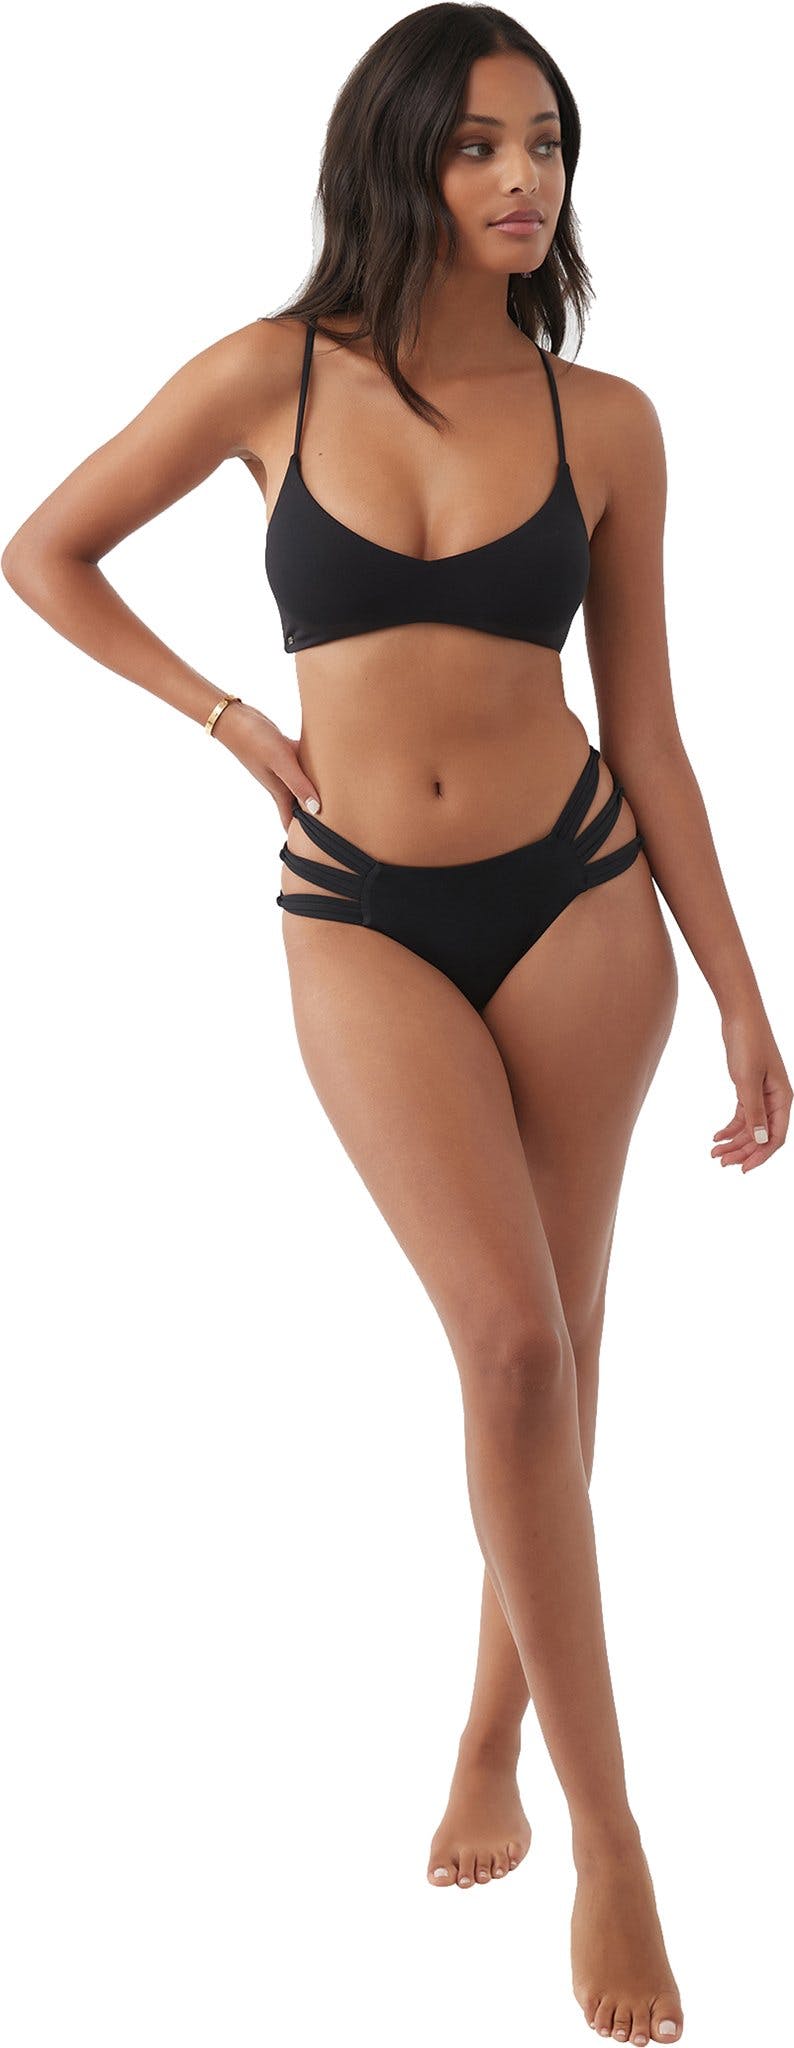 Product image for Saltwater Solids Boulders Bikini Bottom - Women's